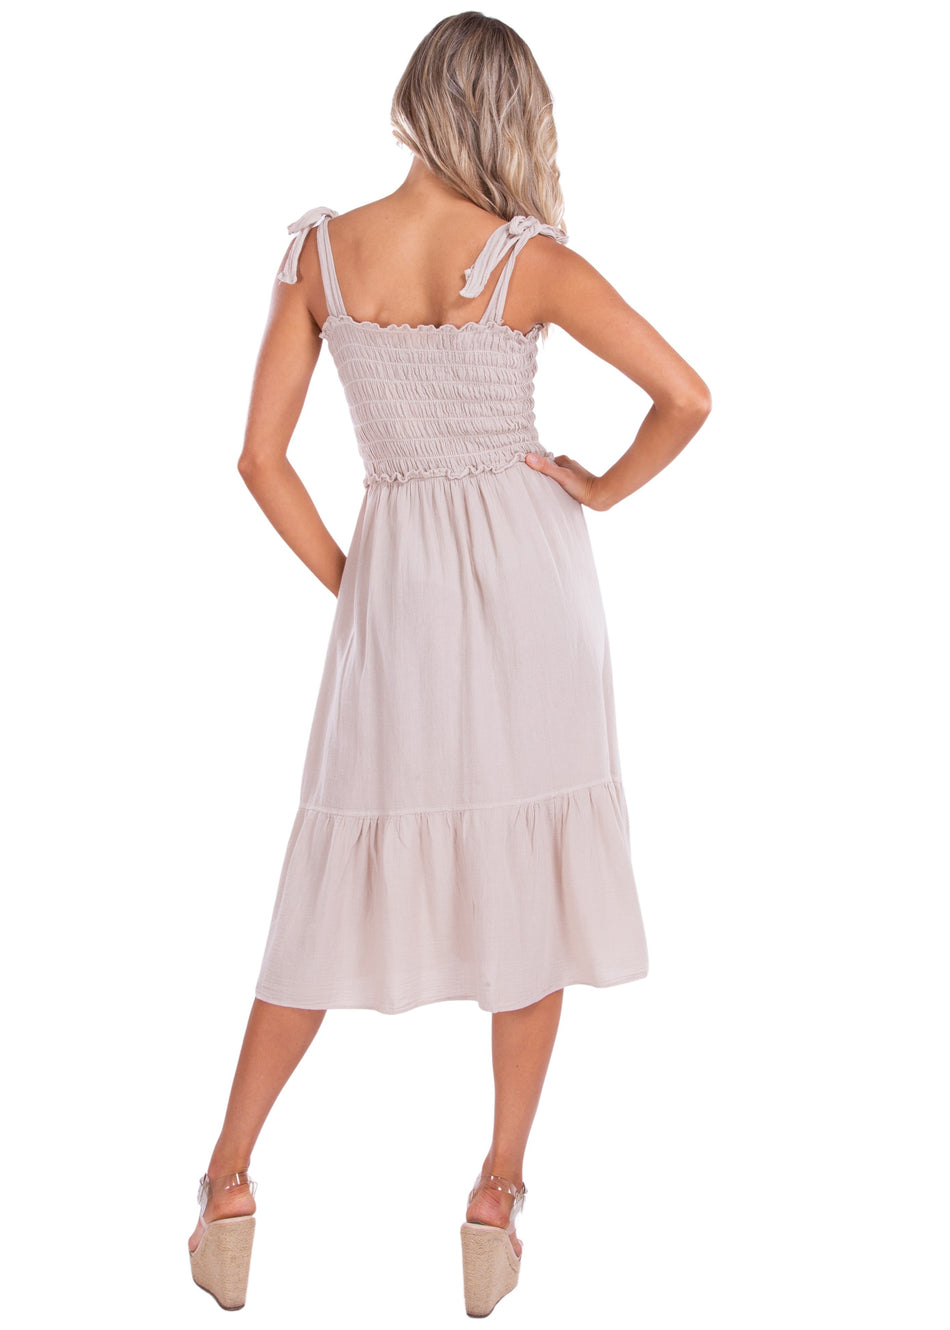 NW1428 - Baby Beige Cotton Dress